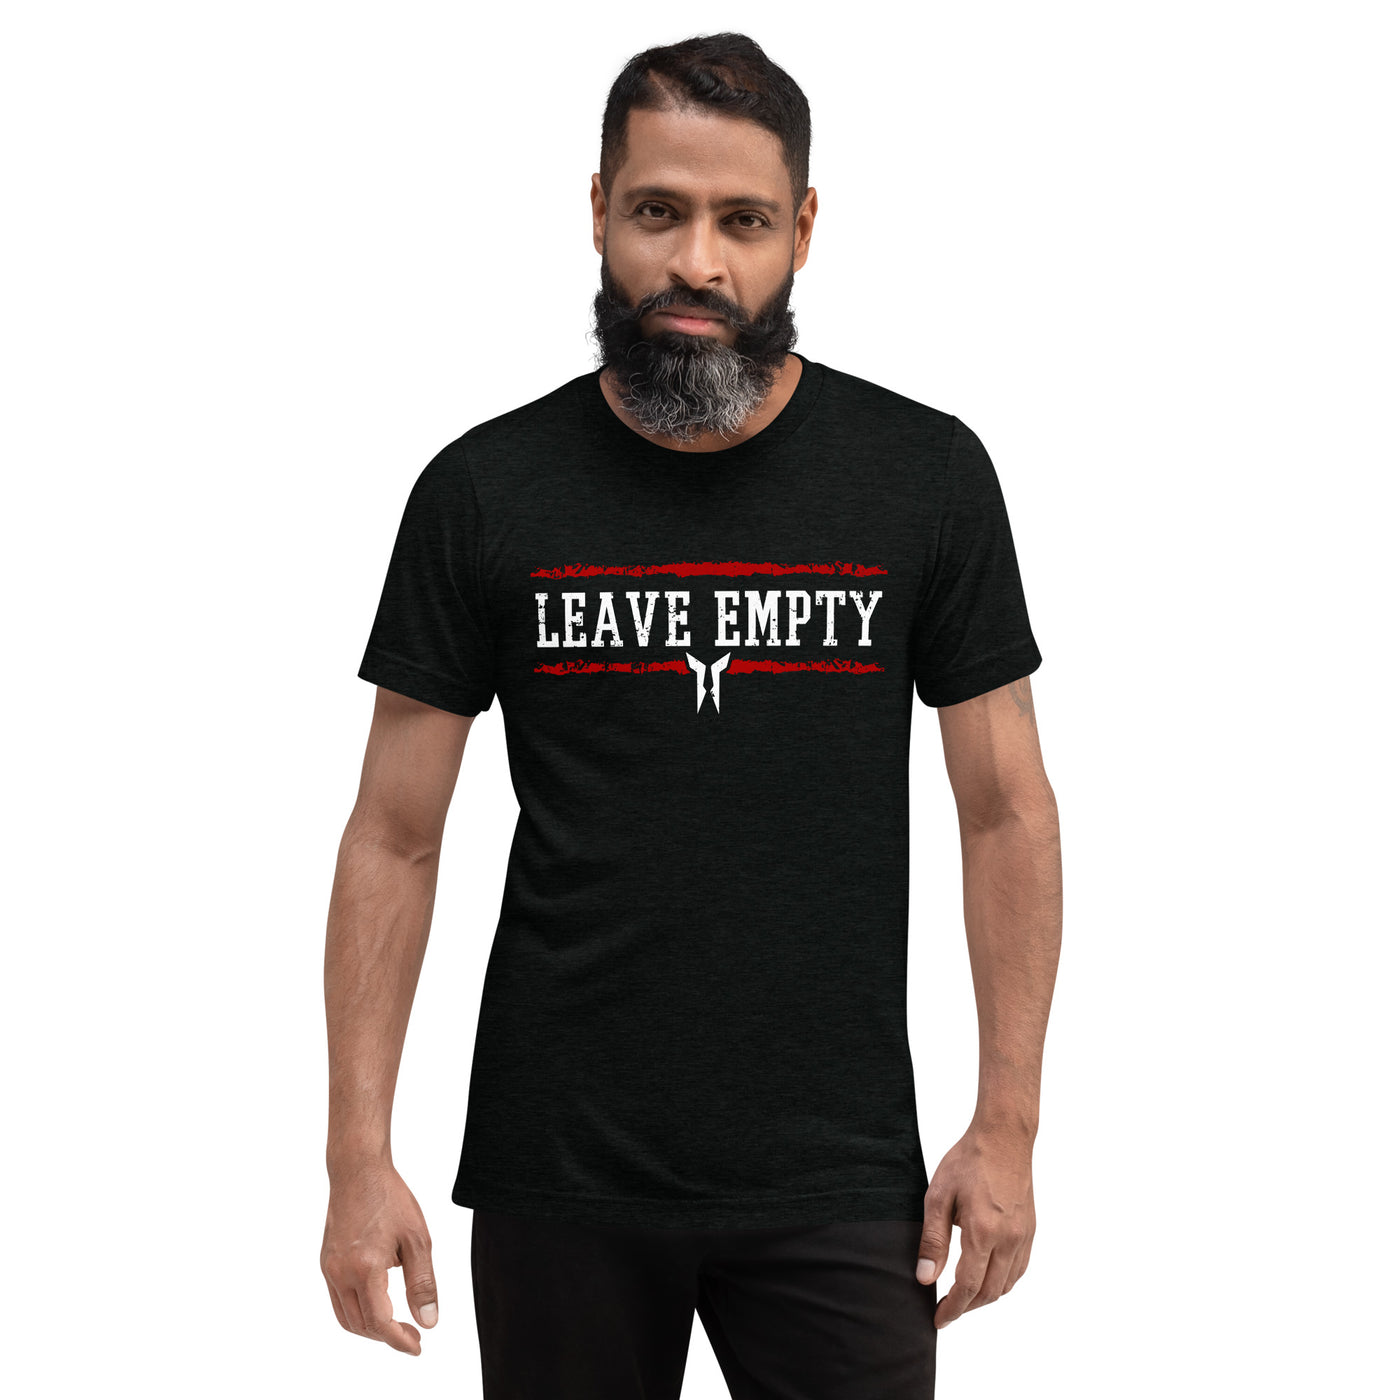 Leave Empty All Black T-shirt